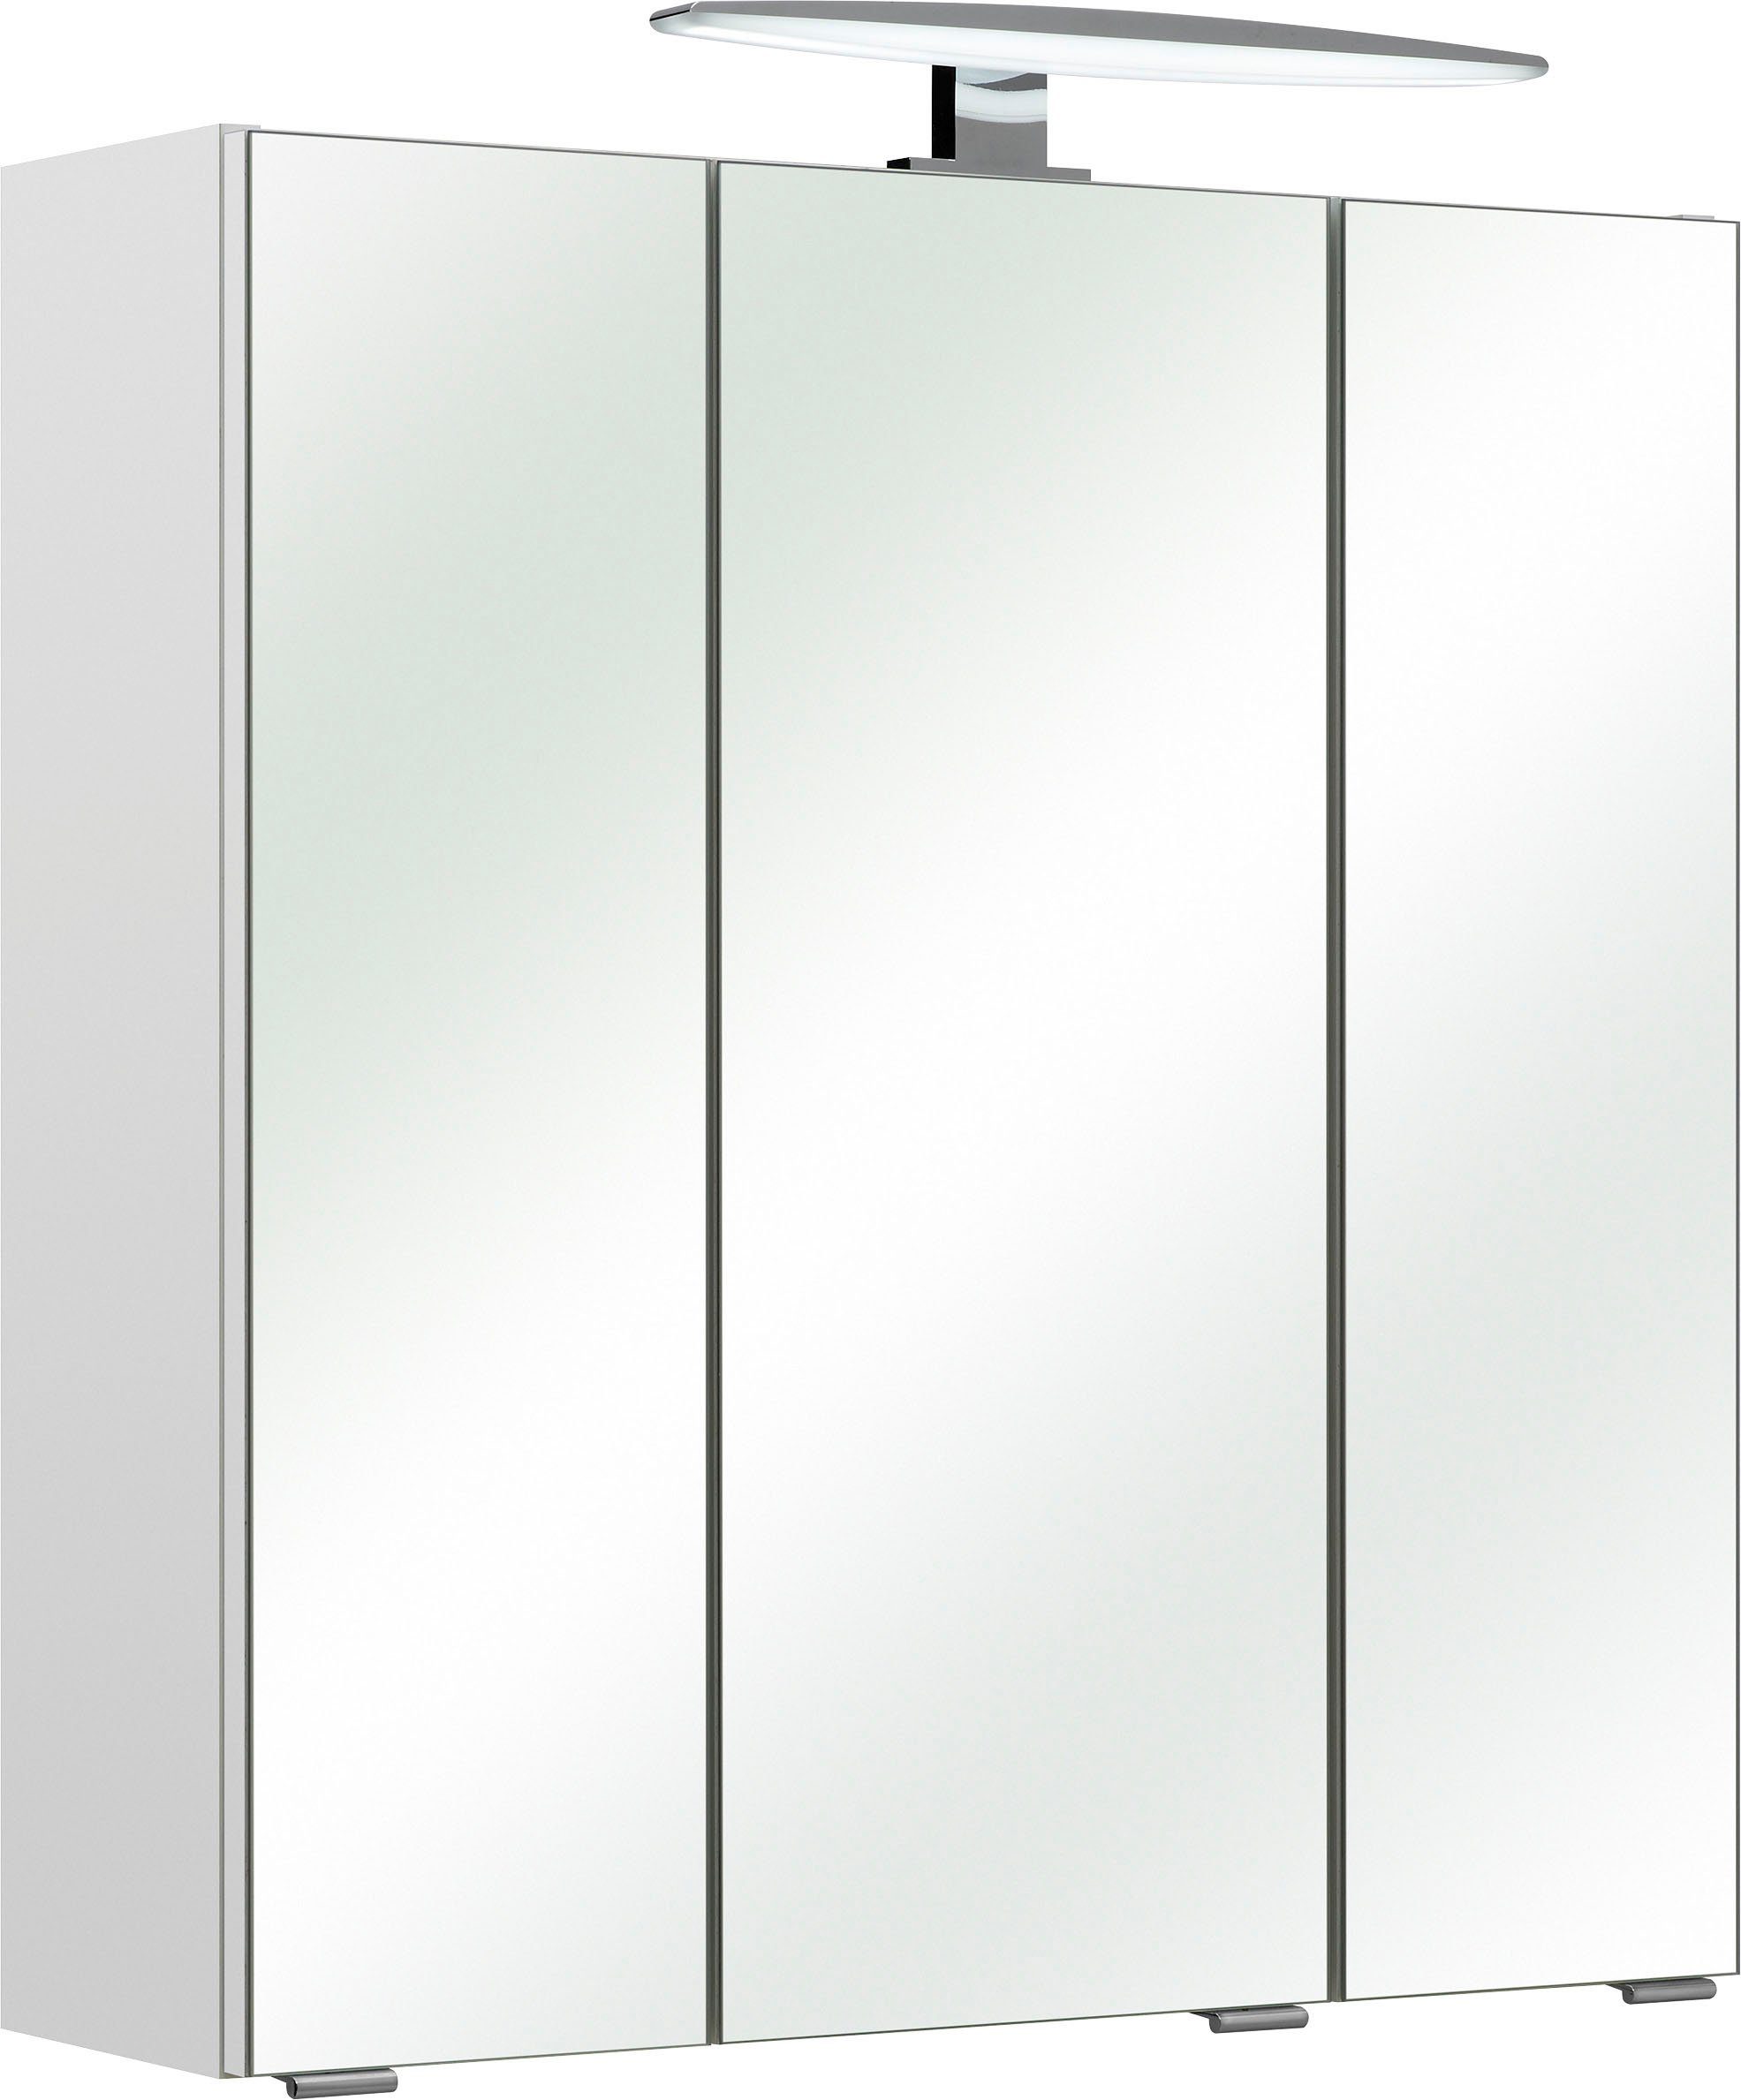 PELIPAL Spiegelschrank Quickset 953 Breite 65 cm, 3-türig, LED-Beleuchtung, Schalter-/Steckdosenbox